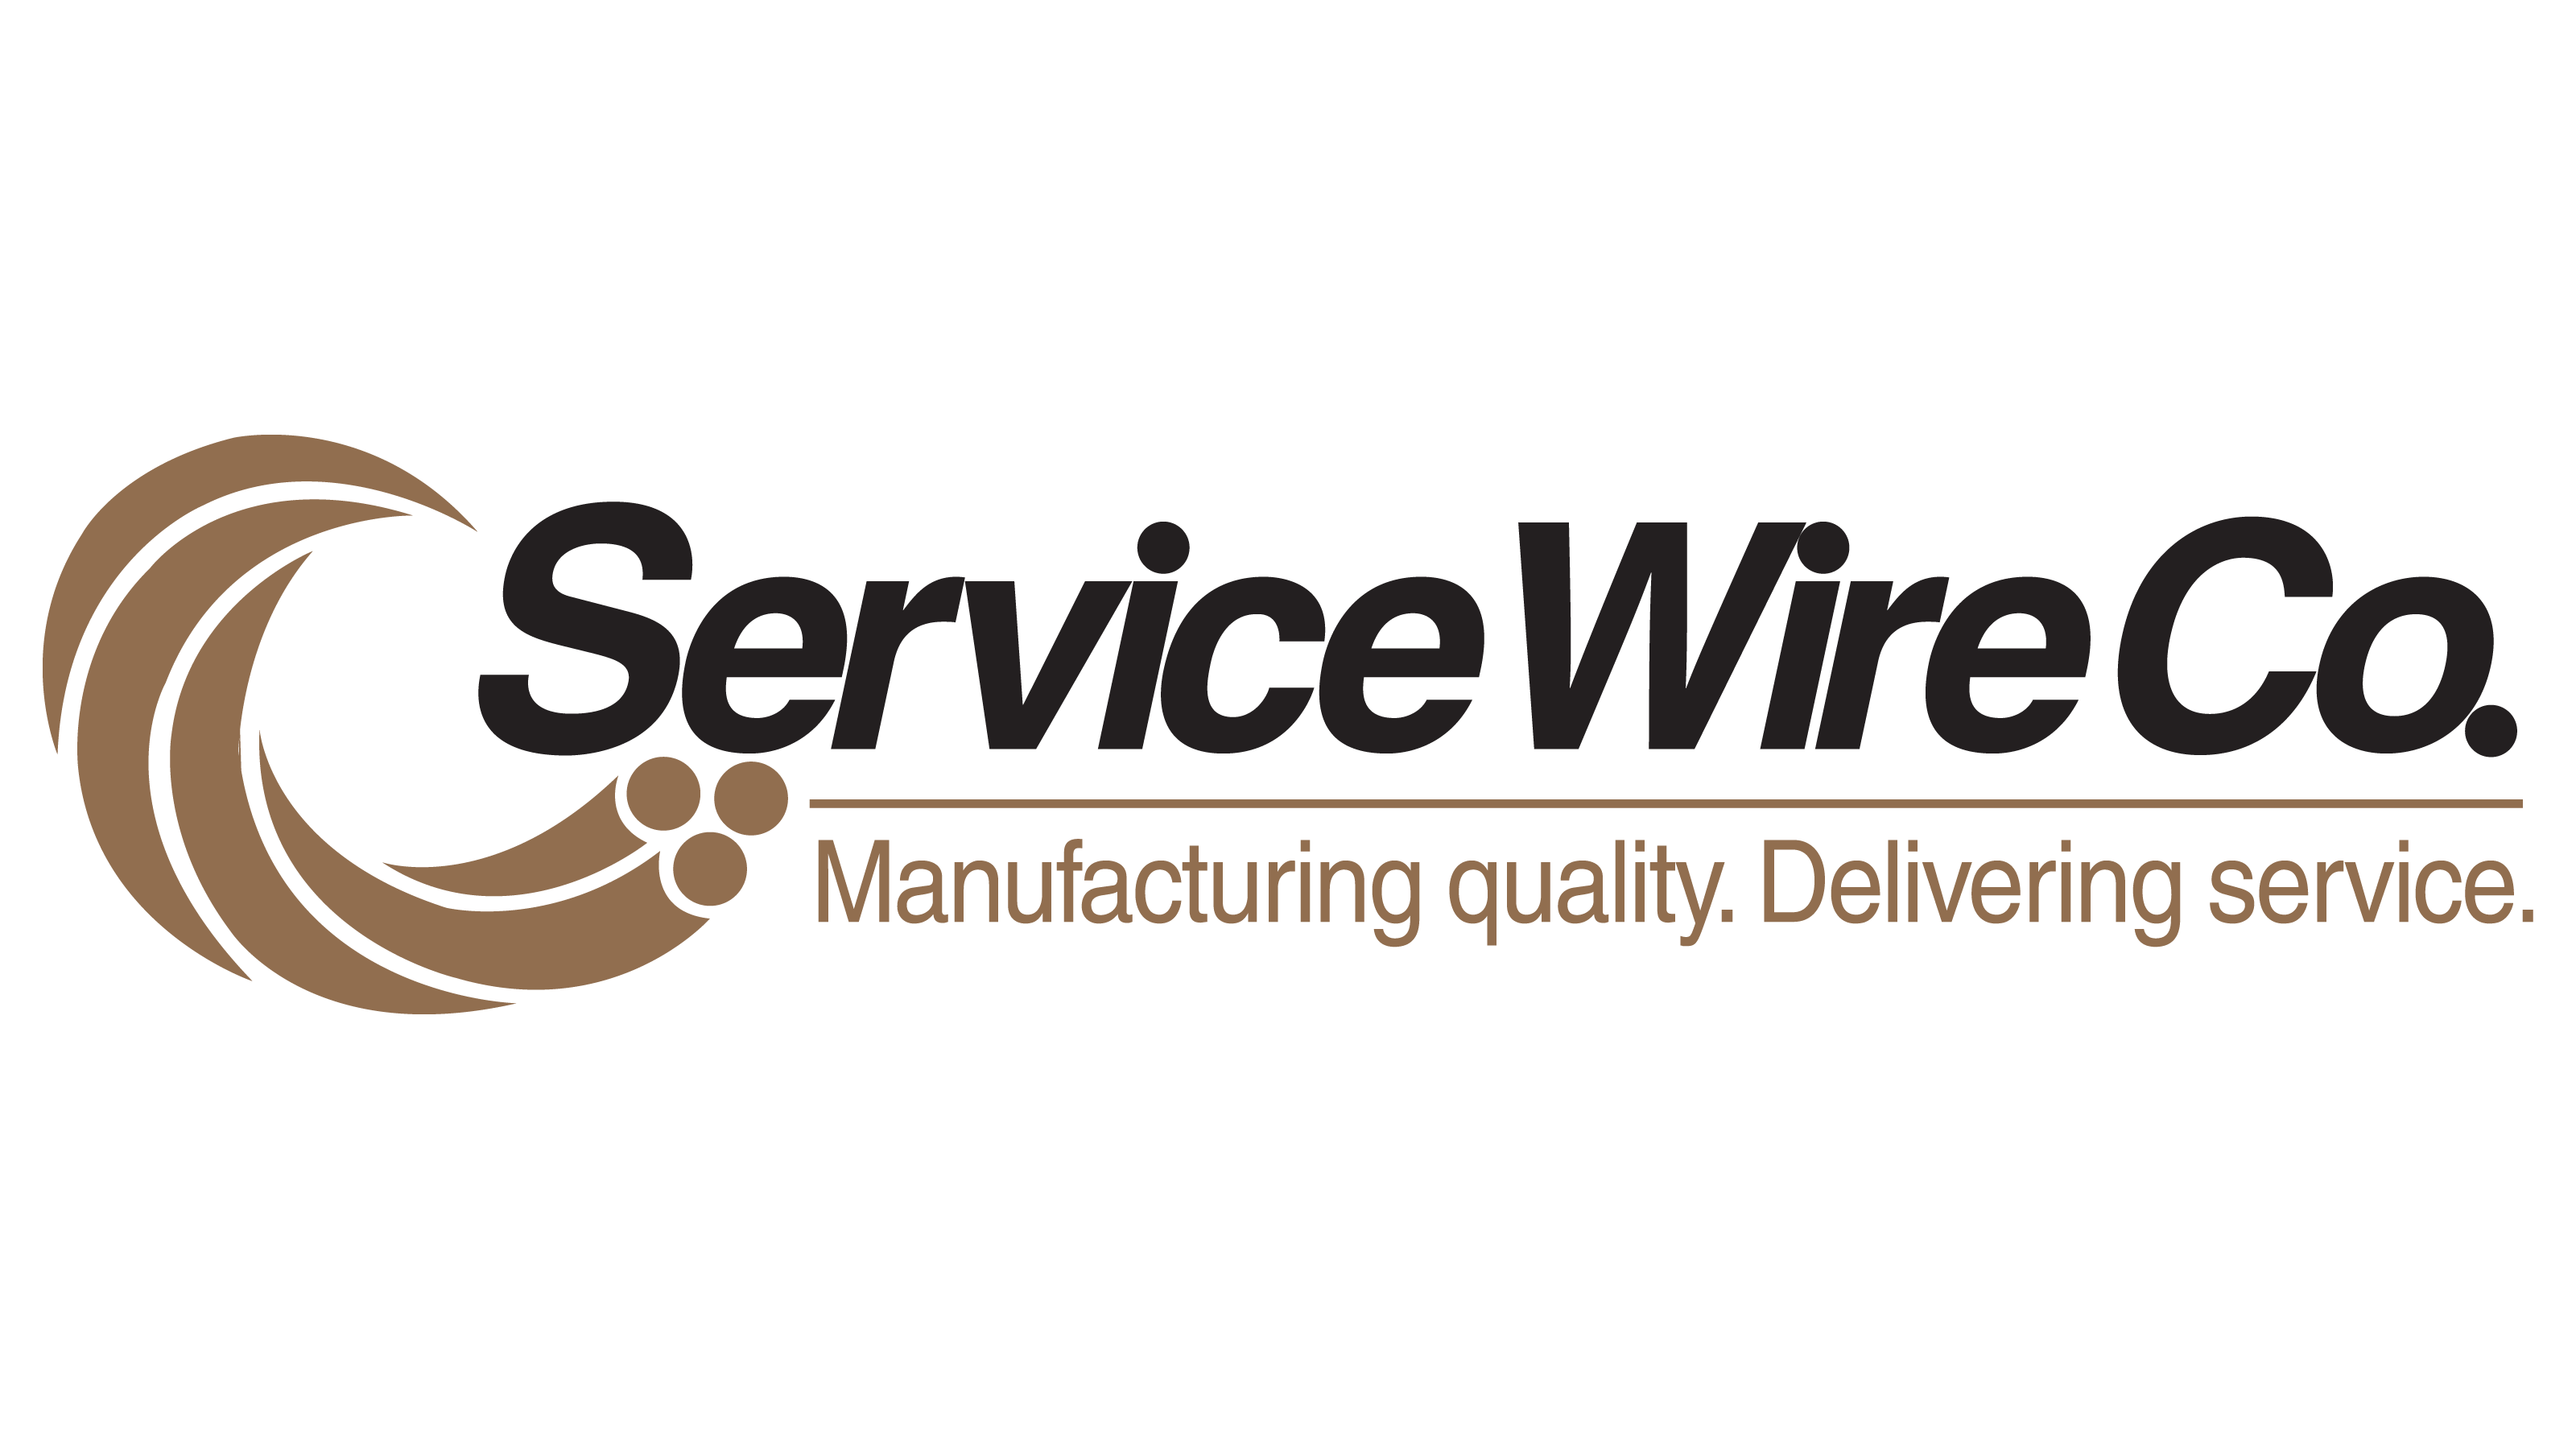 Service Wire Co. logo